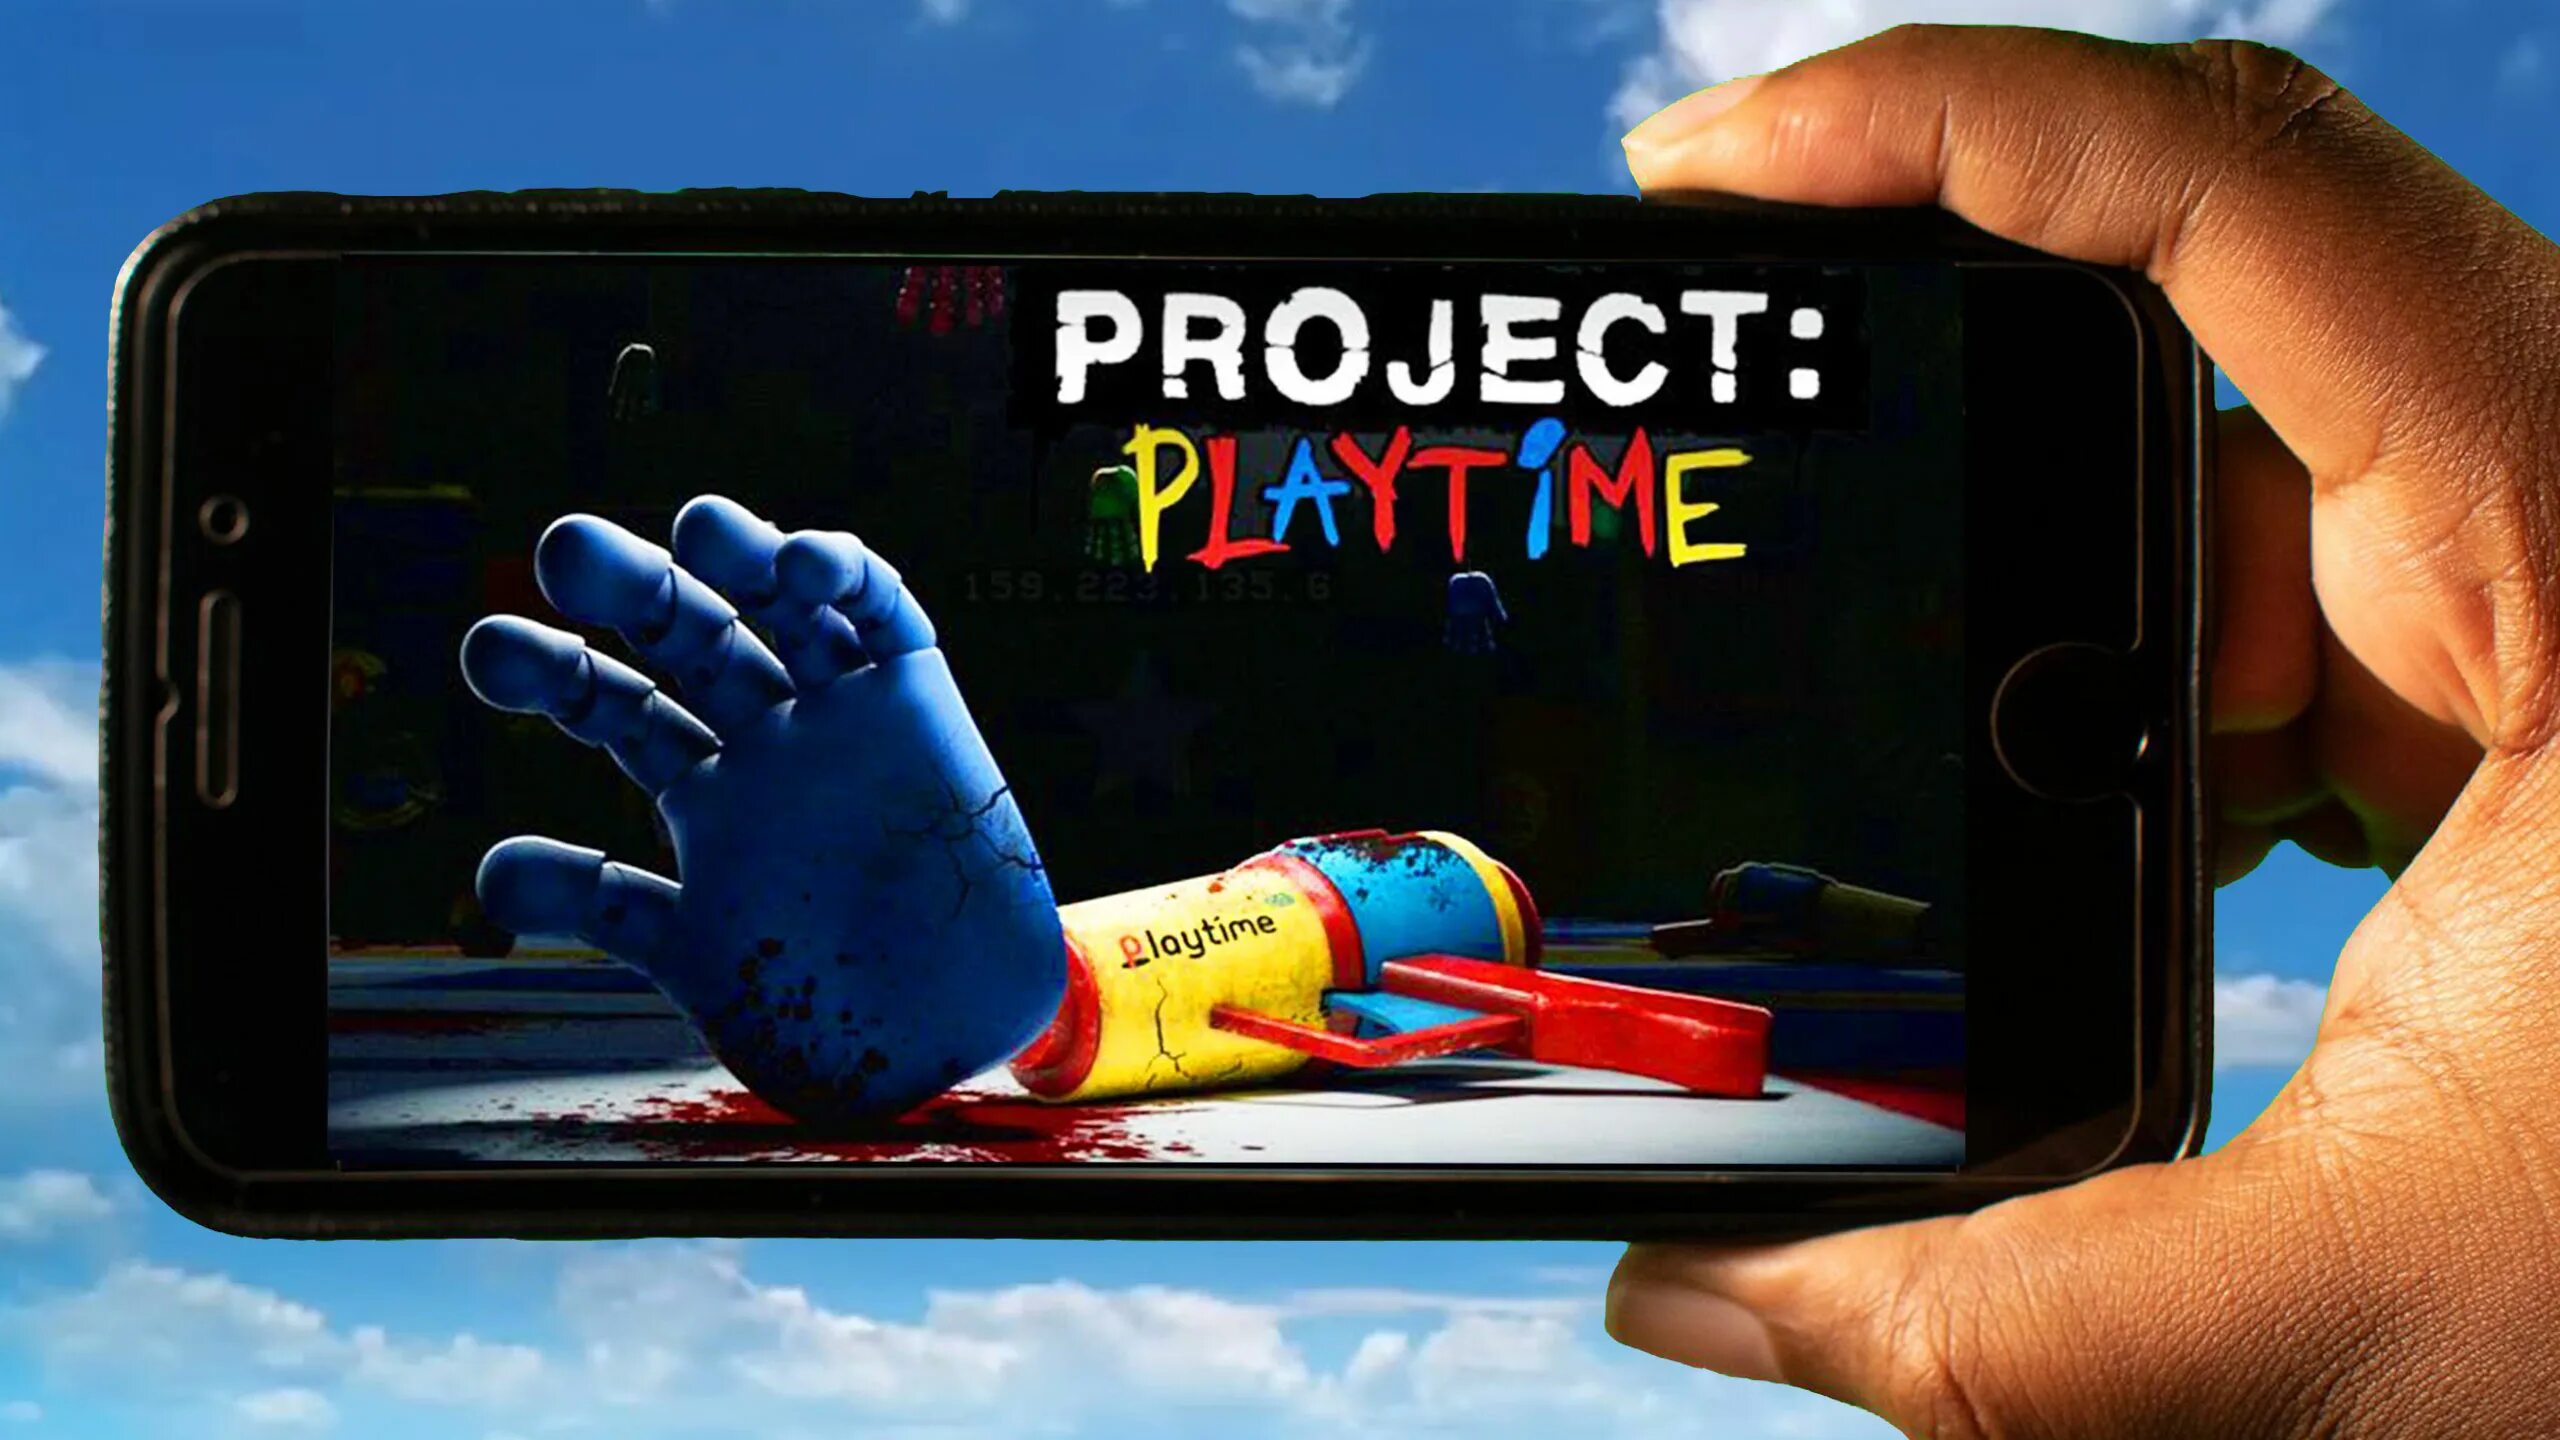 Project Playtime. Проджек плэитаим. Project Playtime тикеты. Проект Play time mobile. Project playtime game